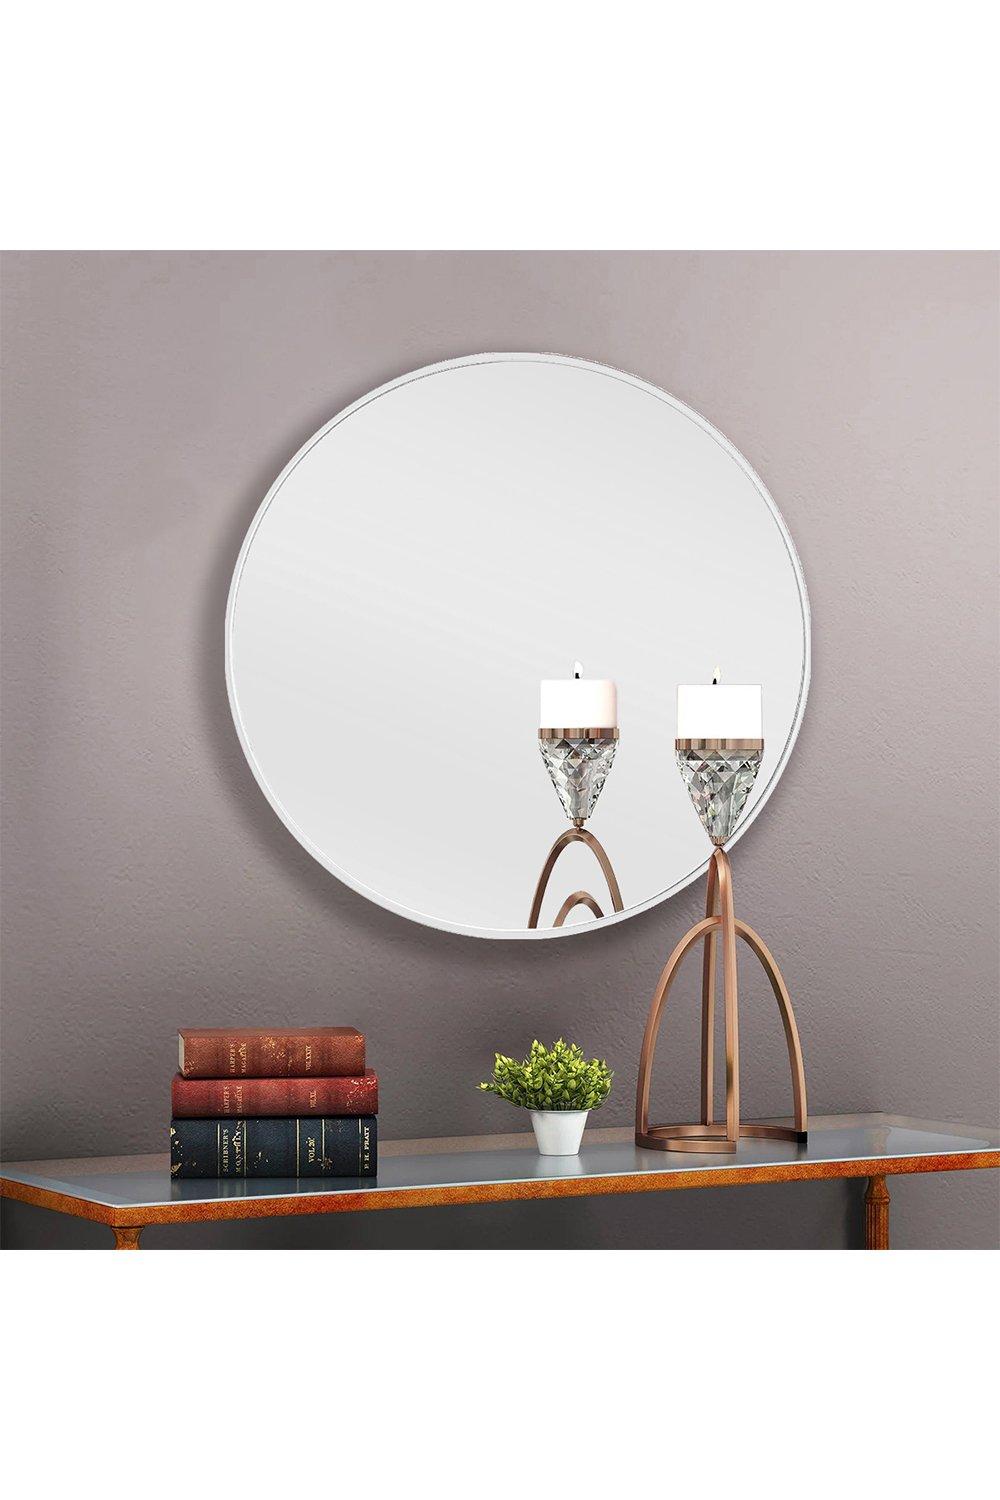 50cm Dia Nordic Round Wall Mirror with White Frame